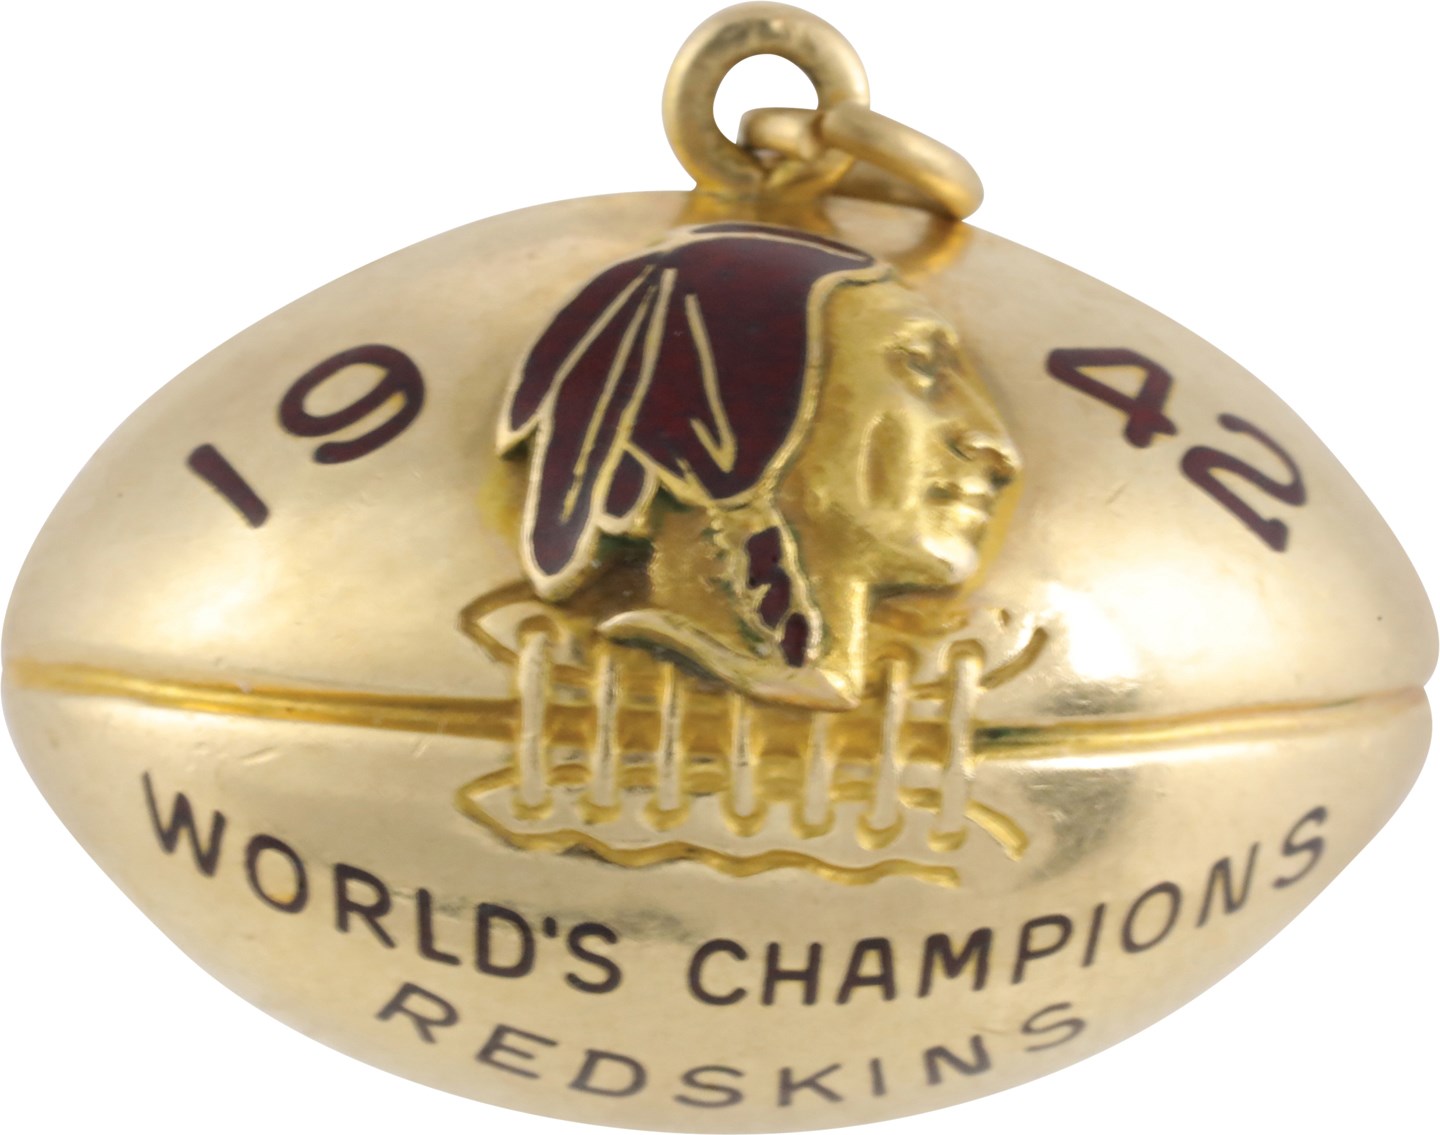 - 1942 Washington Redskins NFL Championship Fob Presented to Arch McDonald